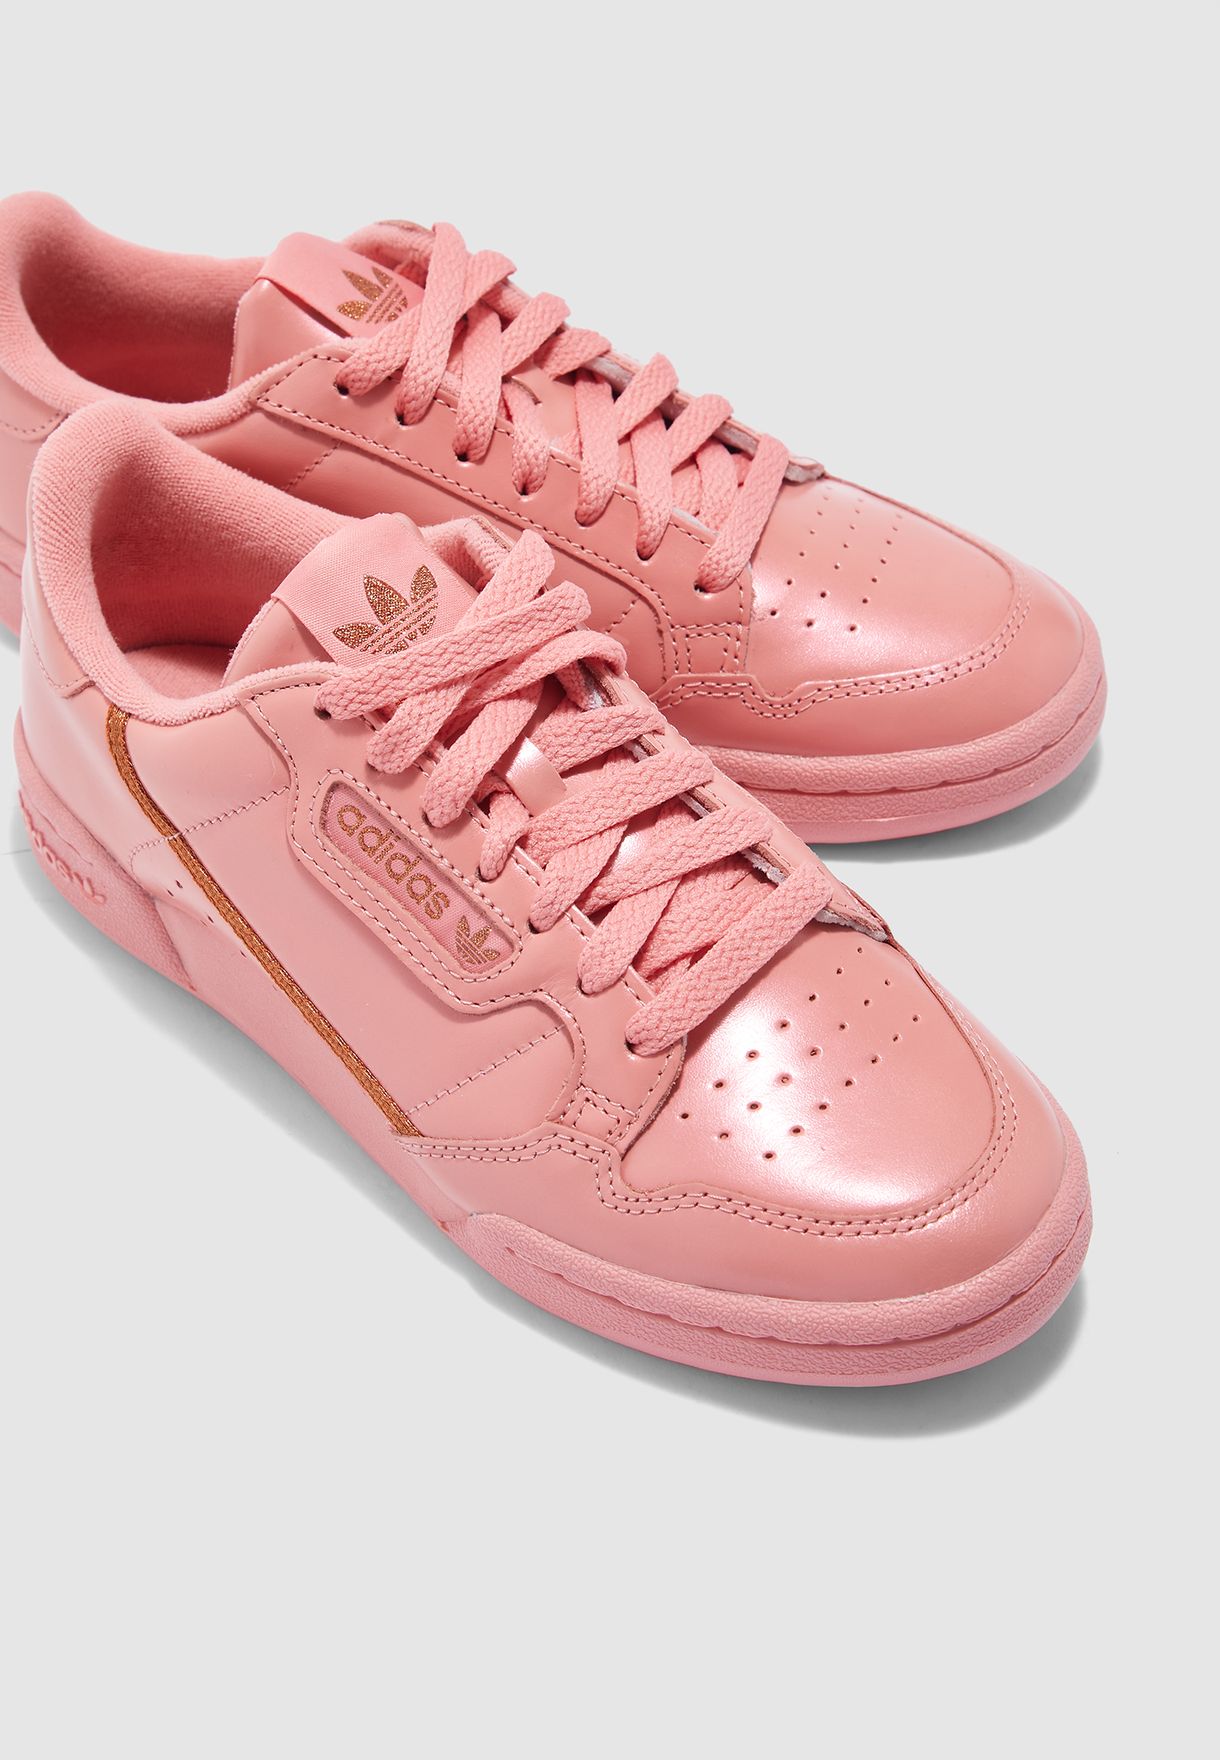 adidas originals continental 80 women's pink